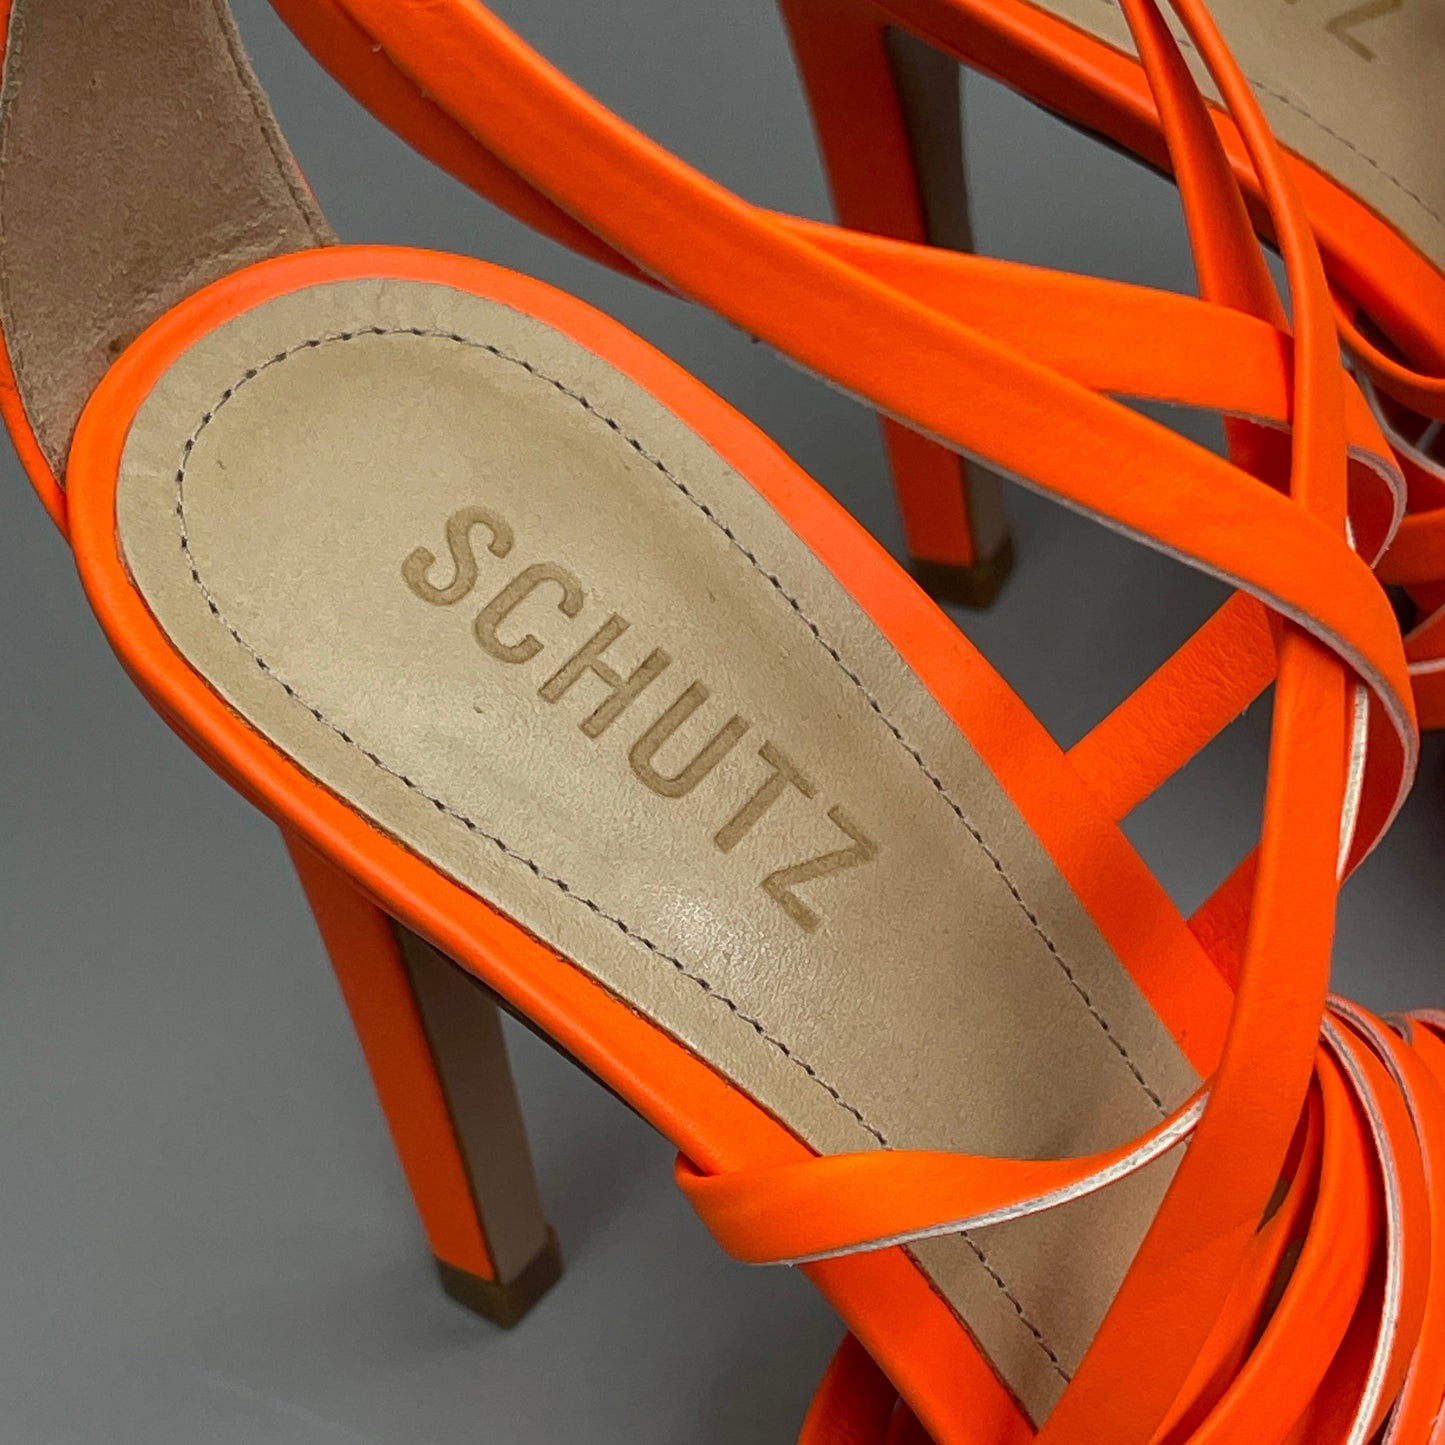 SCHUTZ Bryce Ankle Tie Women's High Heel Leather Strappy Sandal Acid Orange Sz 7 (New)